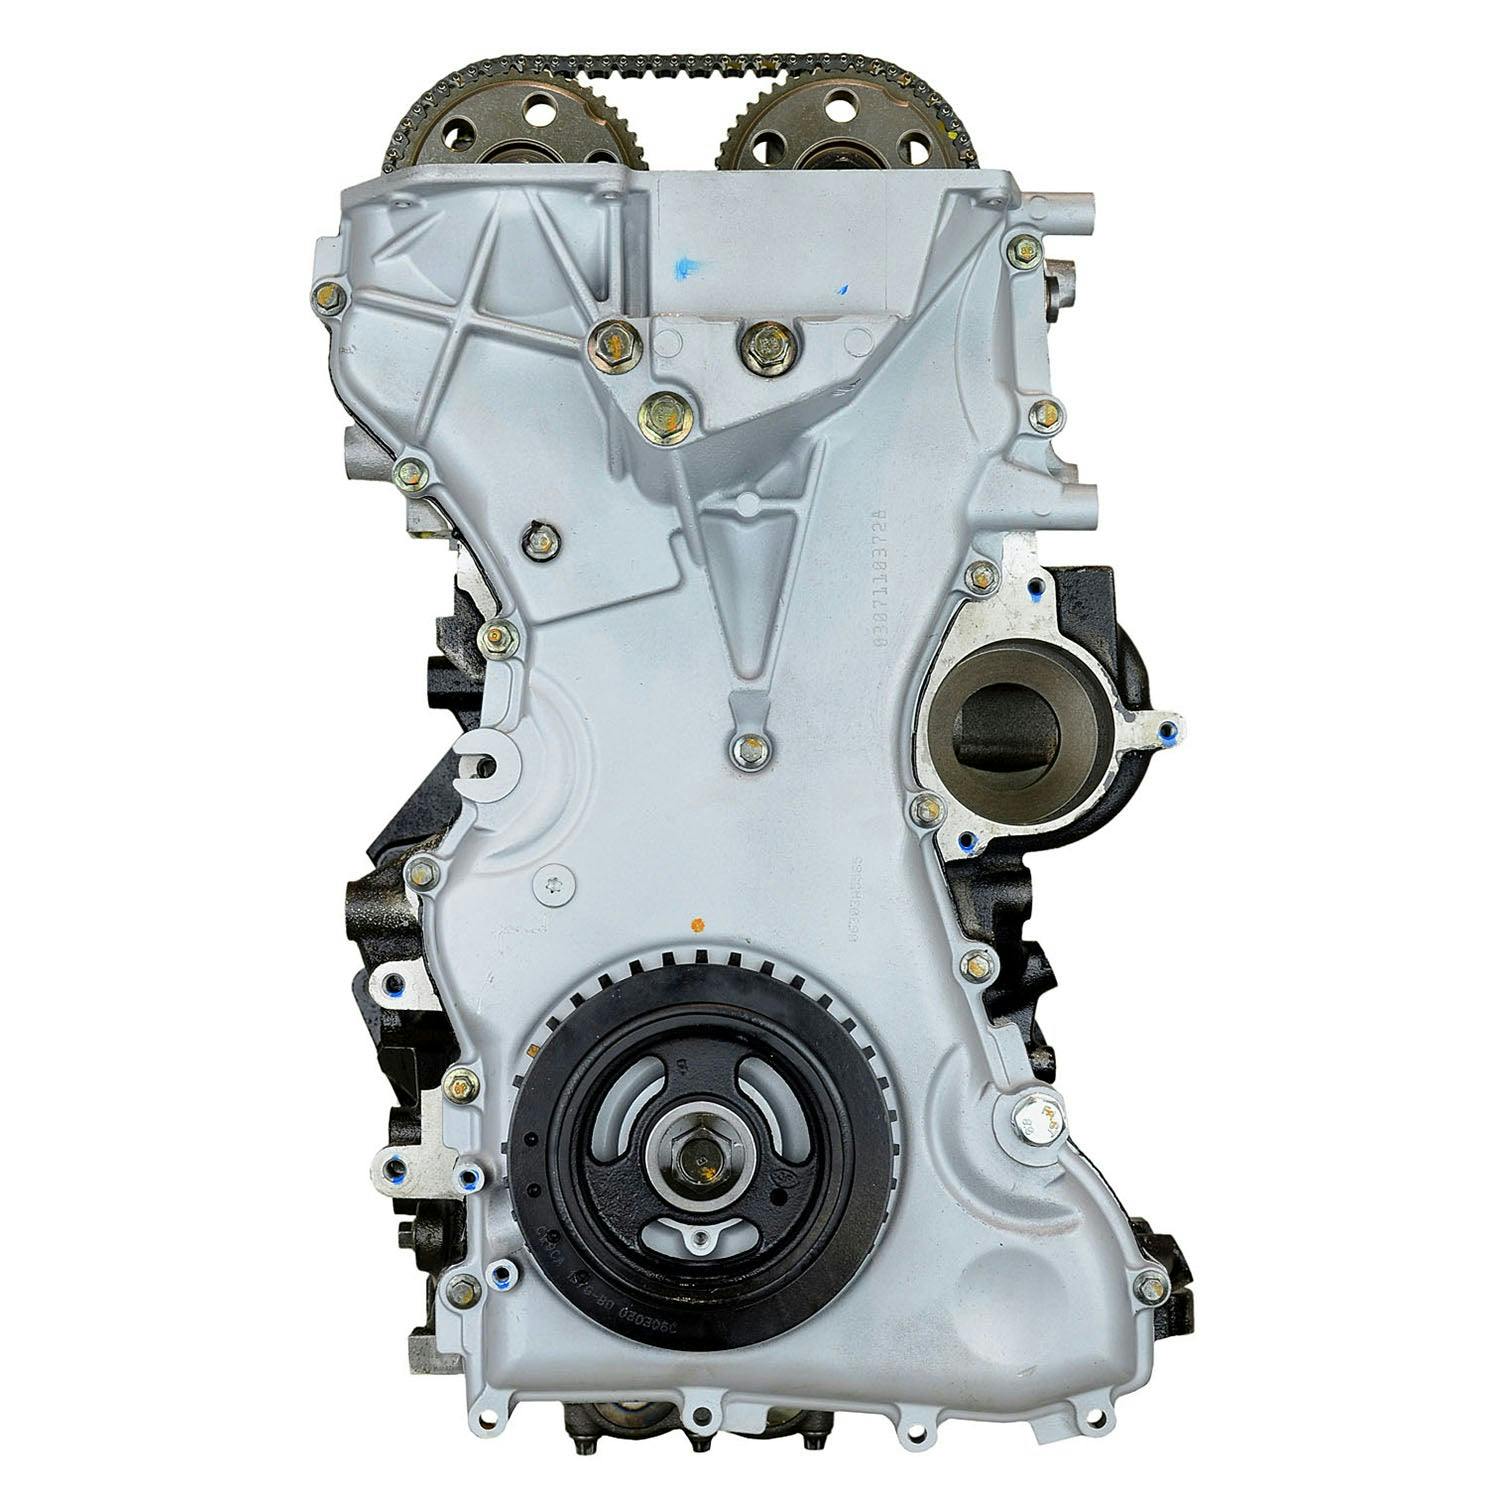 2.3L Inline-4 Engine for 2005-2007 Ford Escape/Mazda Tribute/Mercury Mariner